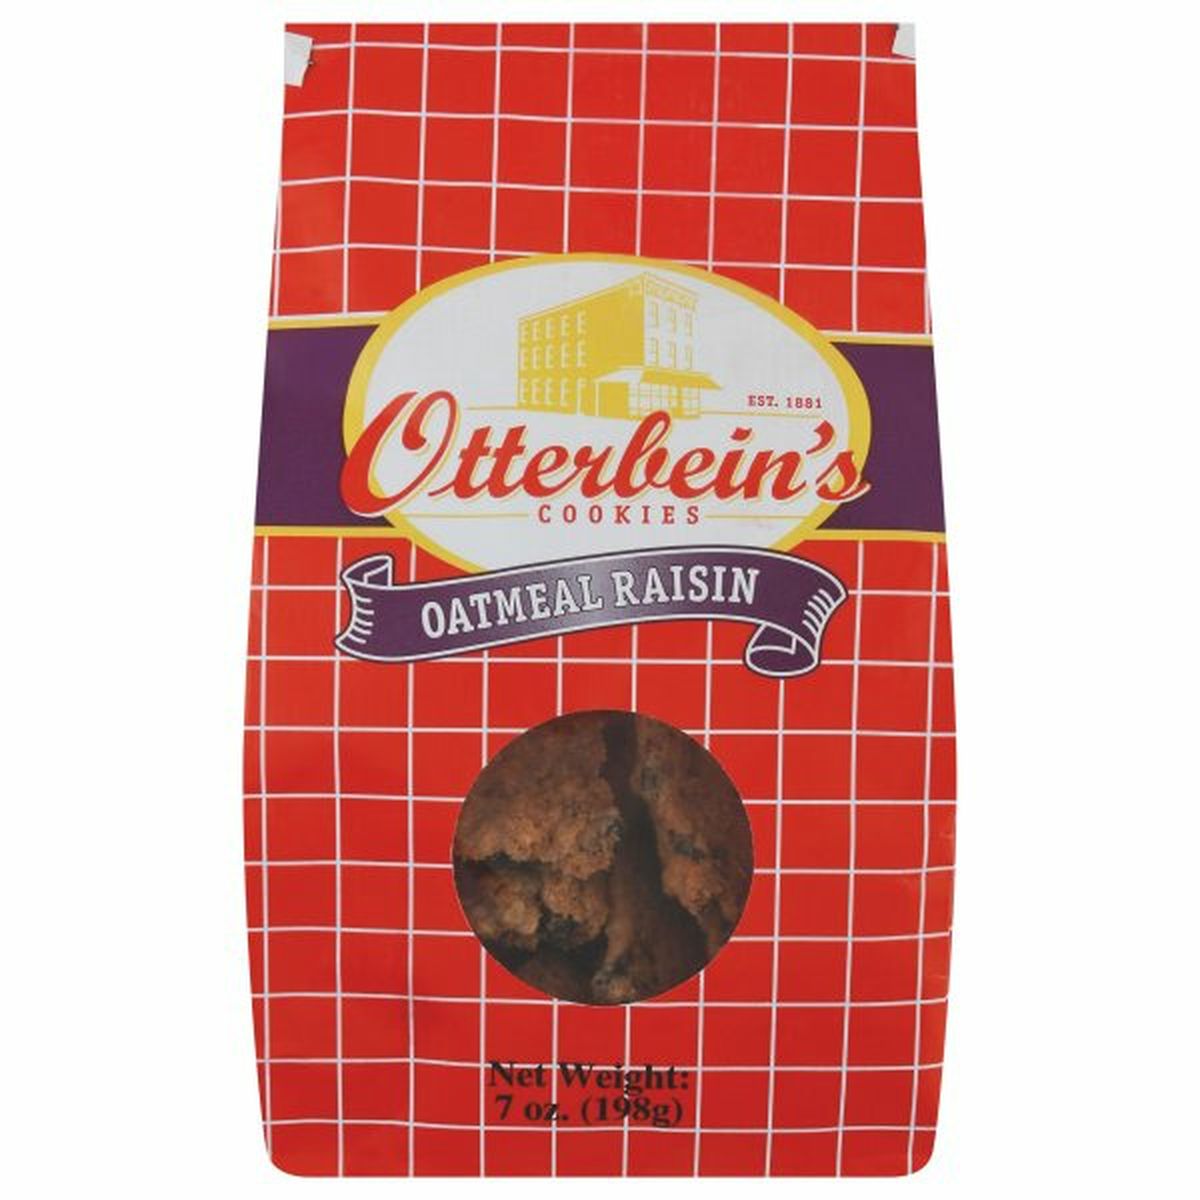 Calories in Otterbein's Cookies, Oatmeal Raisin